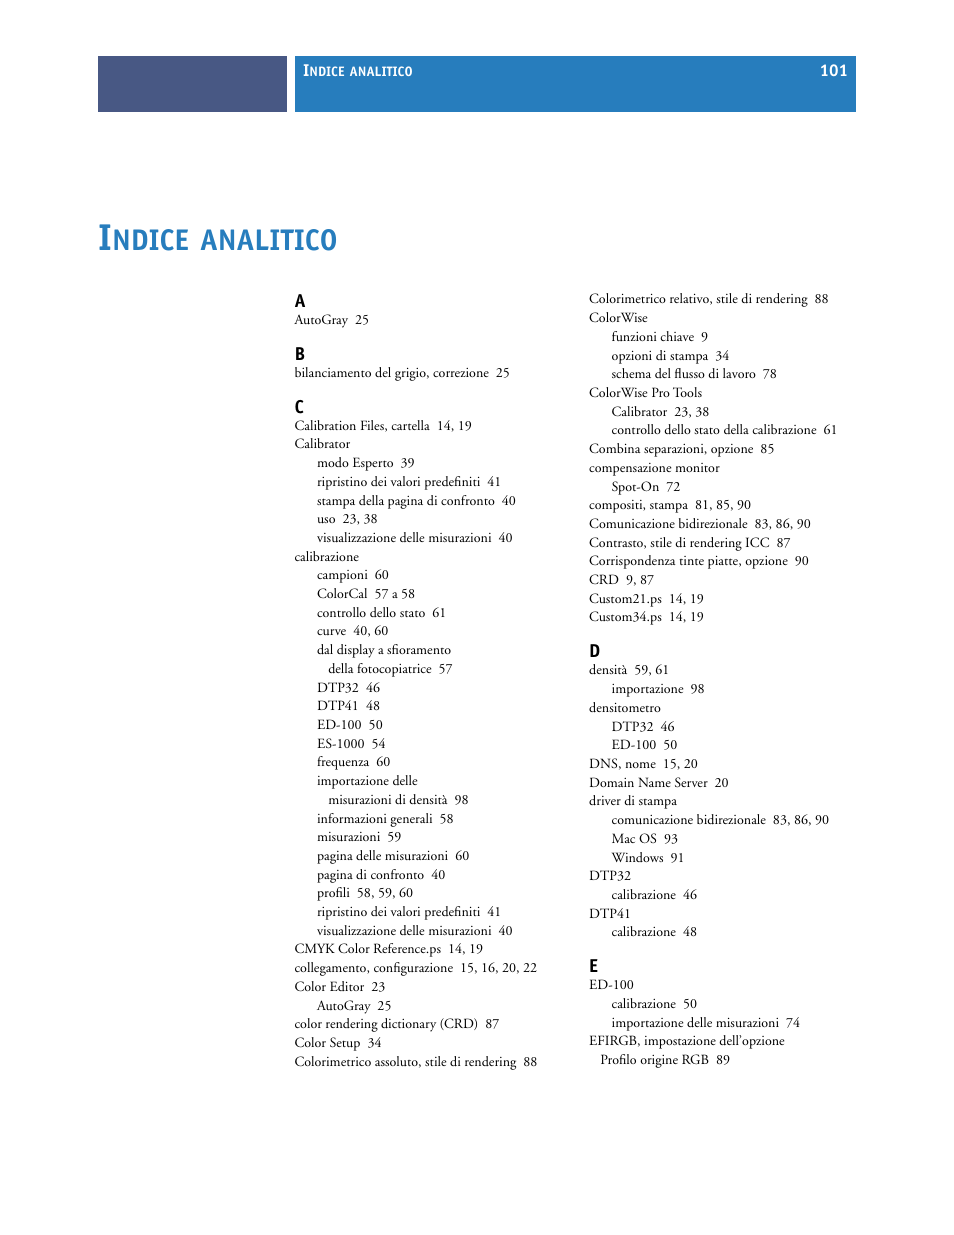 Indice analitico, Ndice, Analitico | Konica Minolta IC-305 Manuale d'uso | Pagina 101 / 104